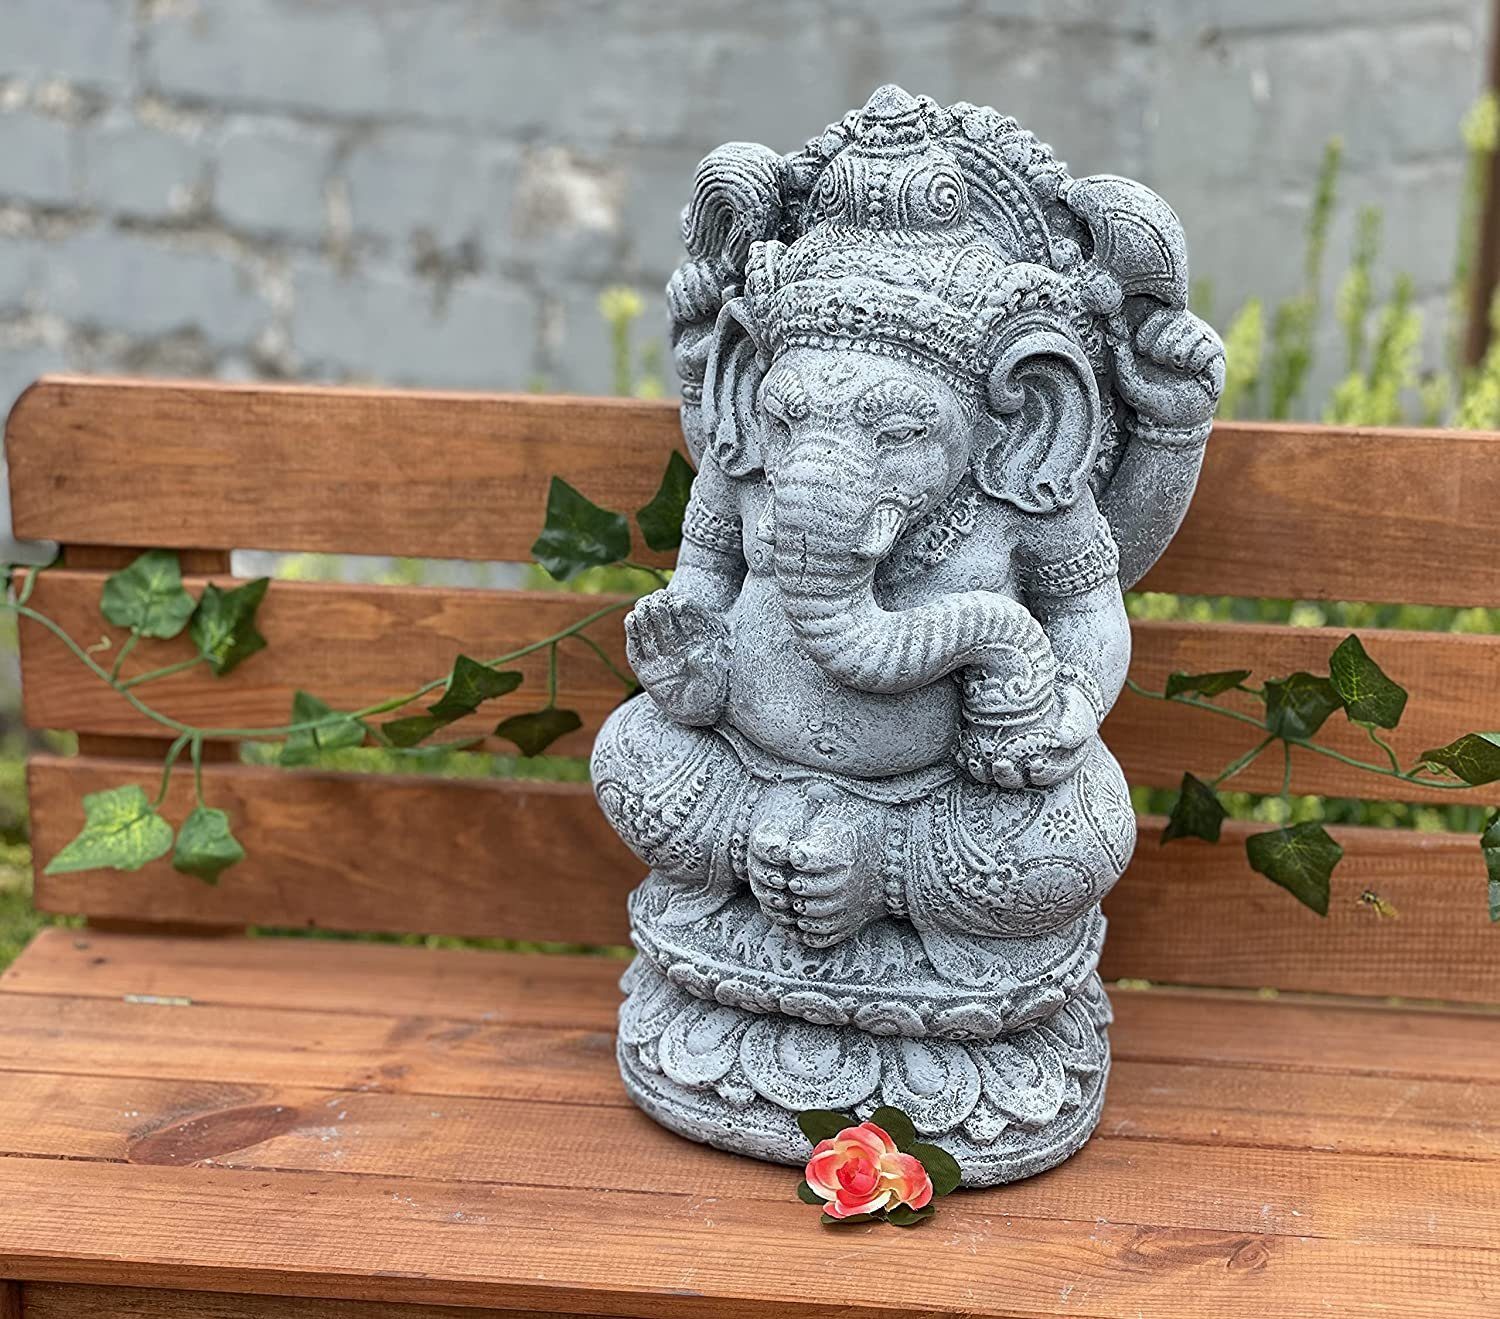 Stone and Style Gartenfigur Ganesha Statue